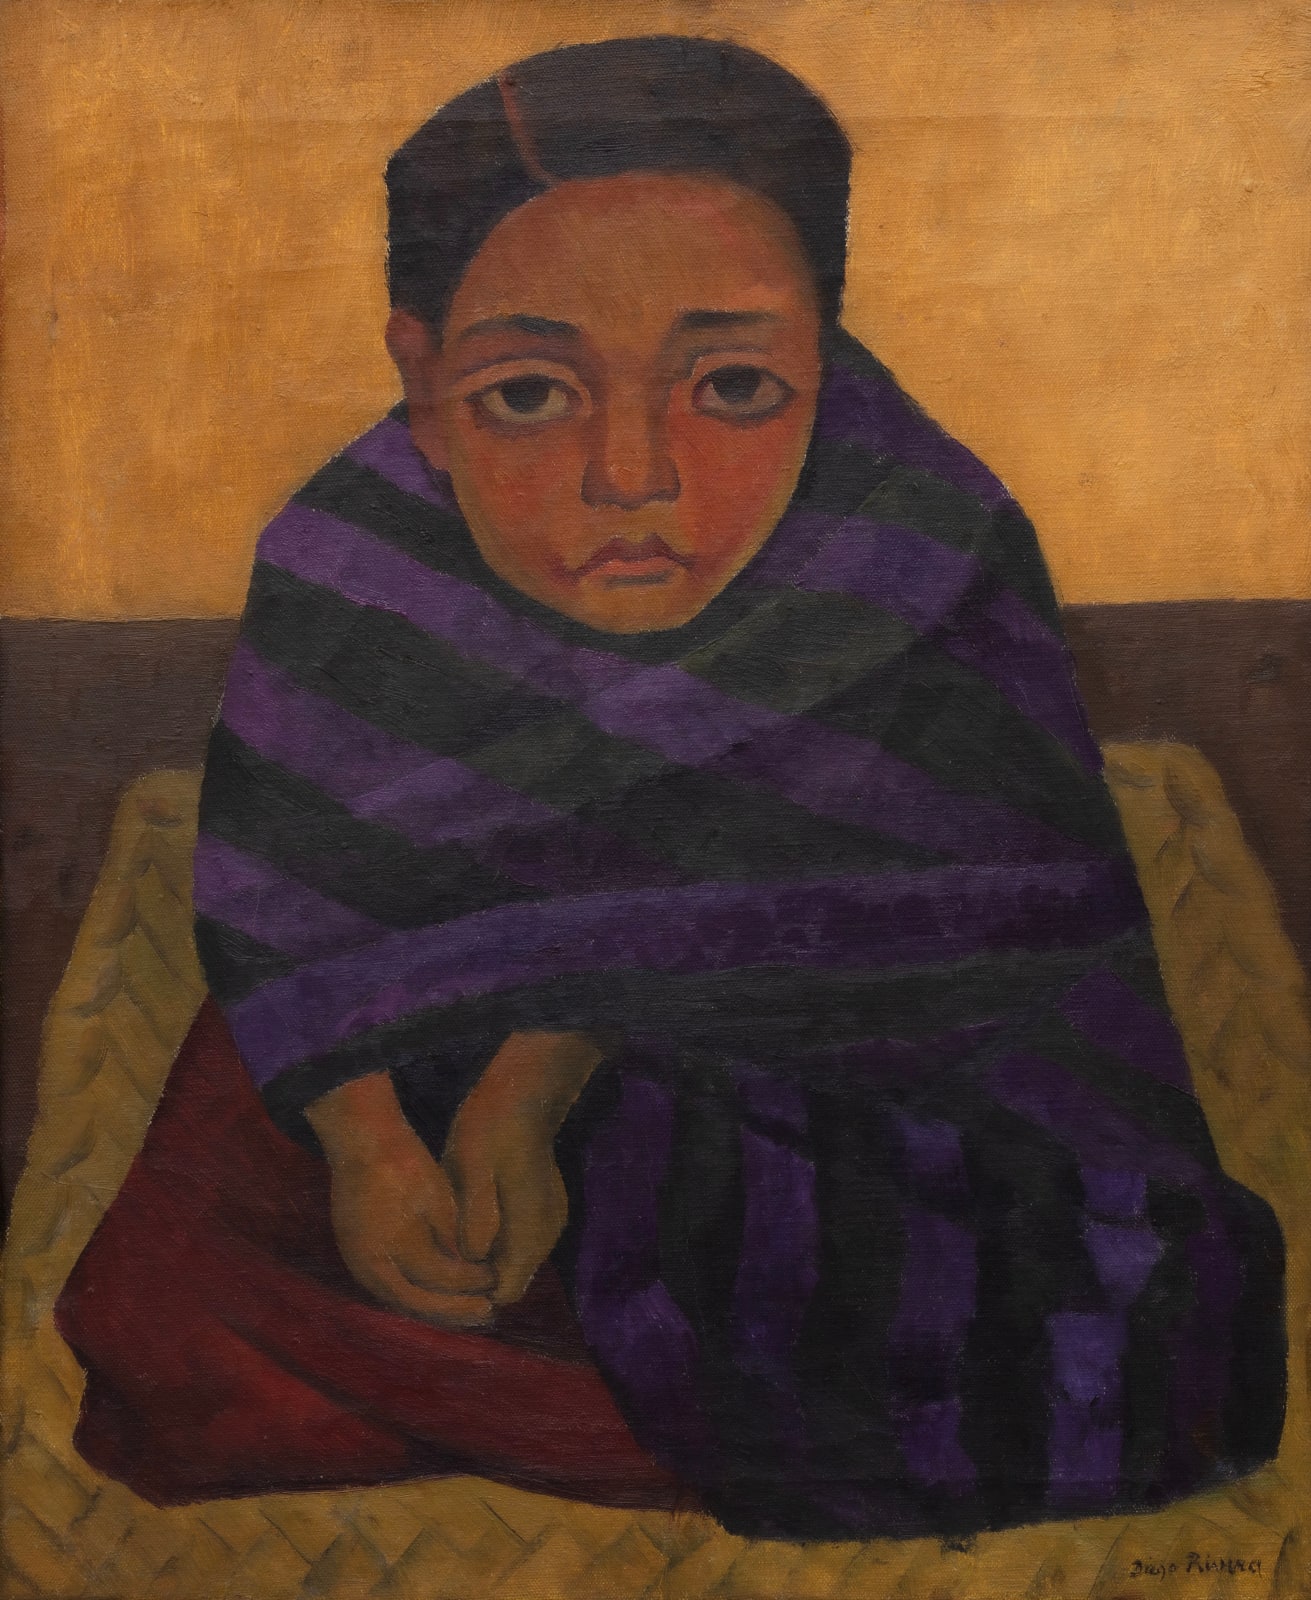 Diego Rivera, Niña sentada con rebozo (Seated Child with Shawl), 1929